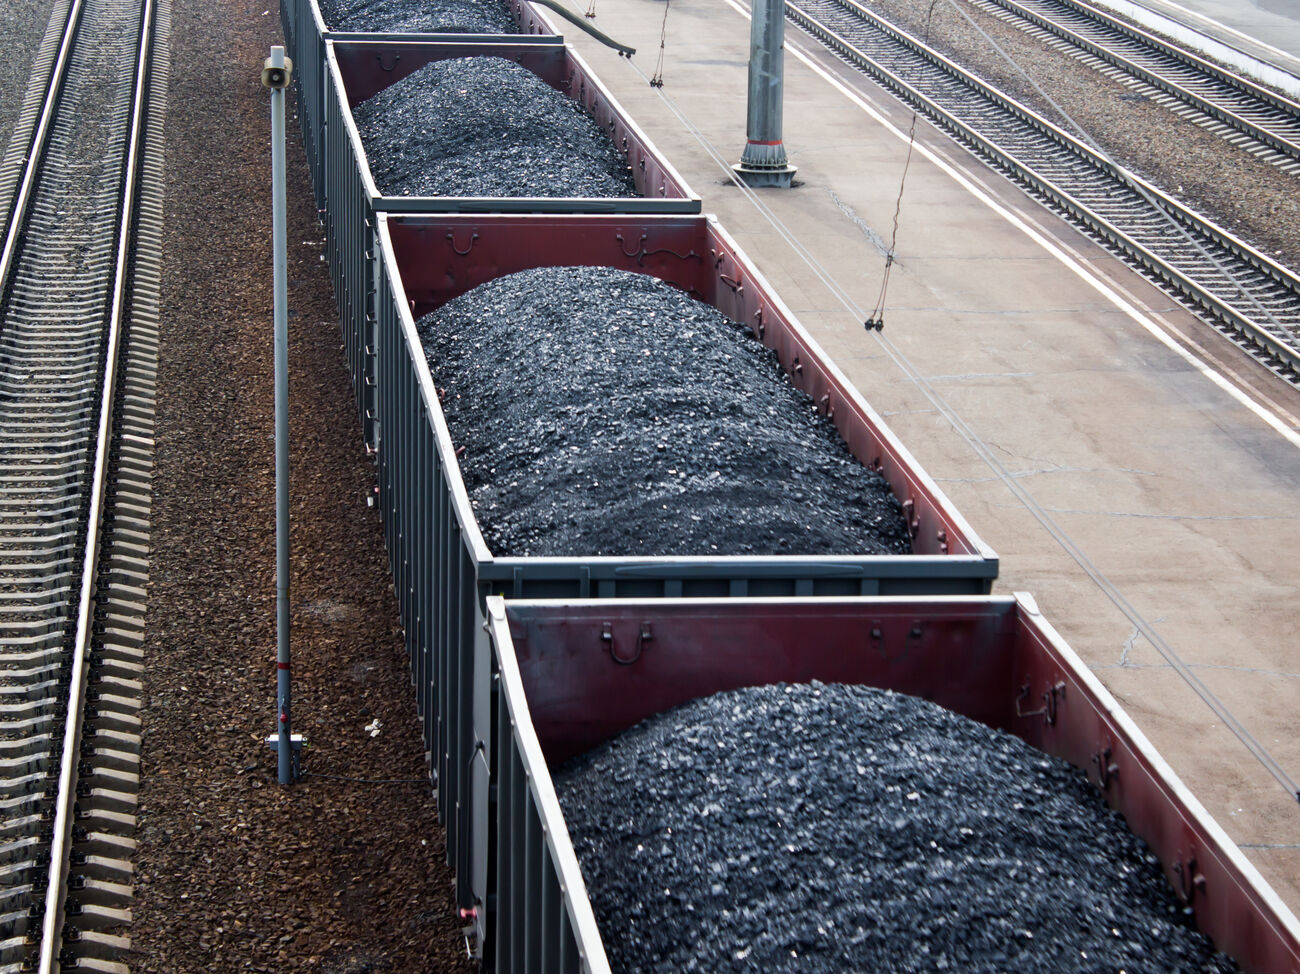 Уголь грузят в вагоны